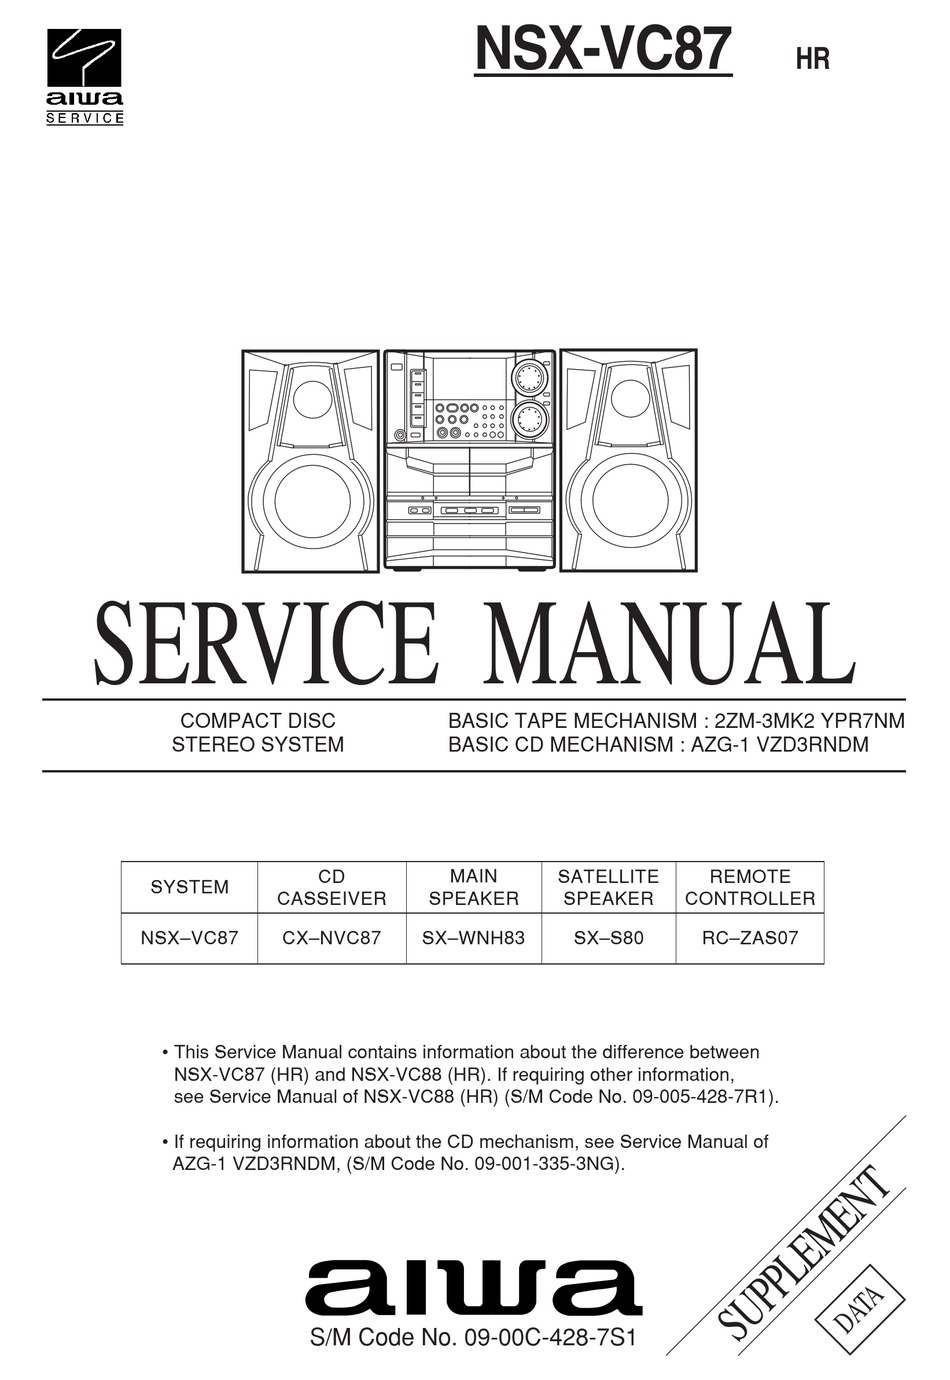 AIWA NSXVC87 SERVICE MANUAL Pdf Download ManualsLib